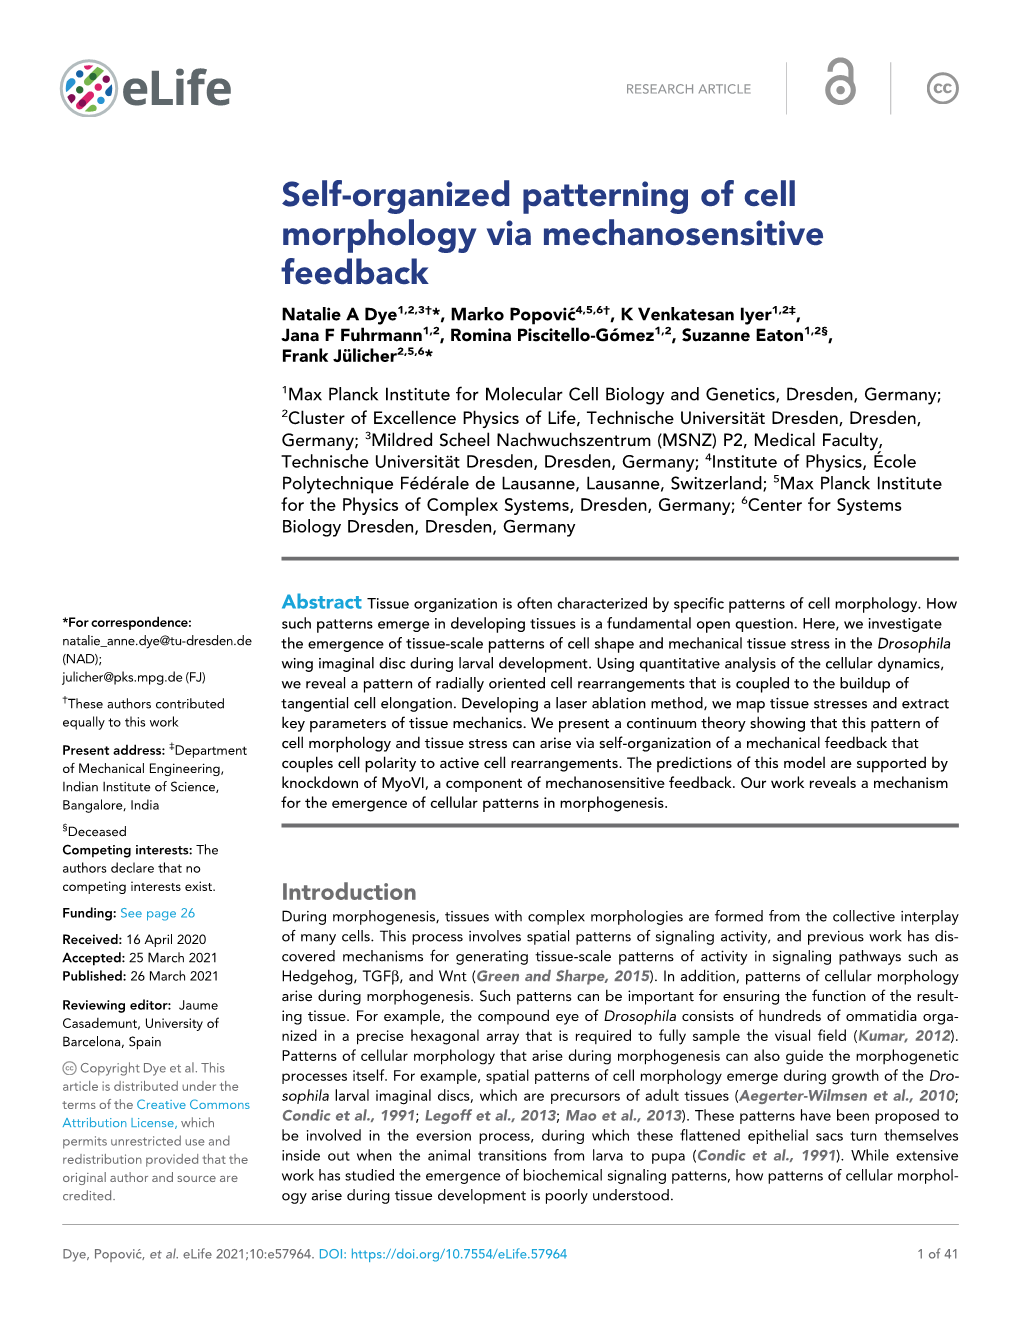 Self-Organized Patterning of Cell Morphology Via Mechanosensitive